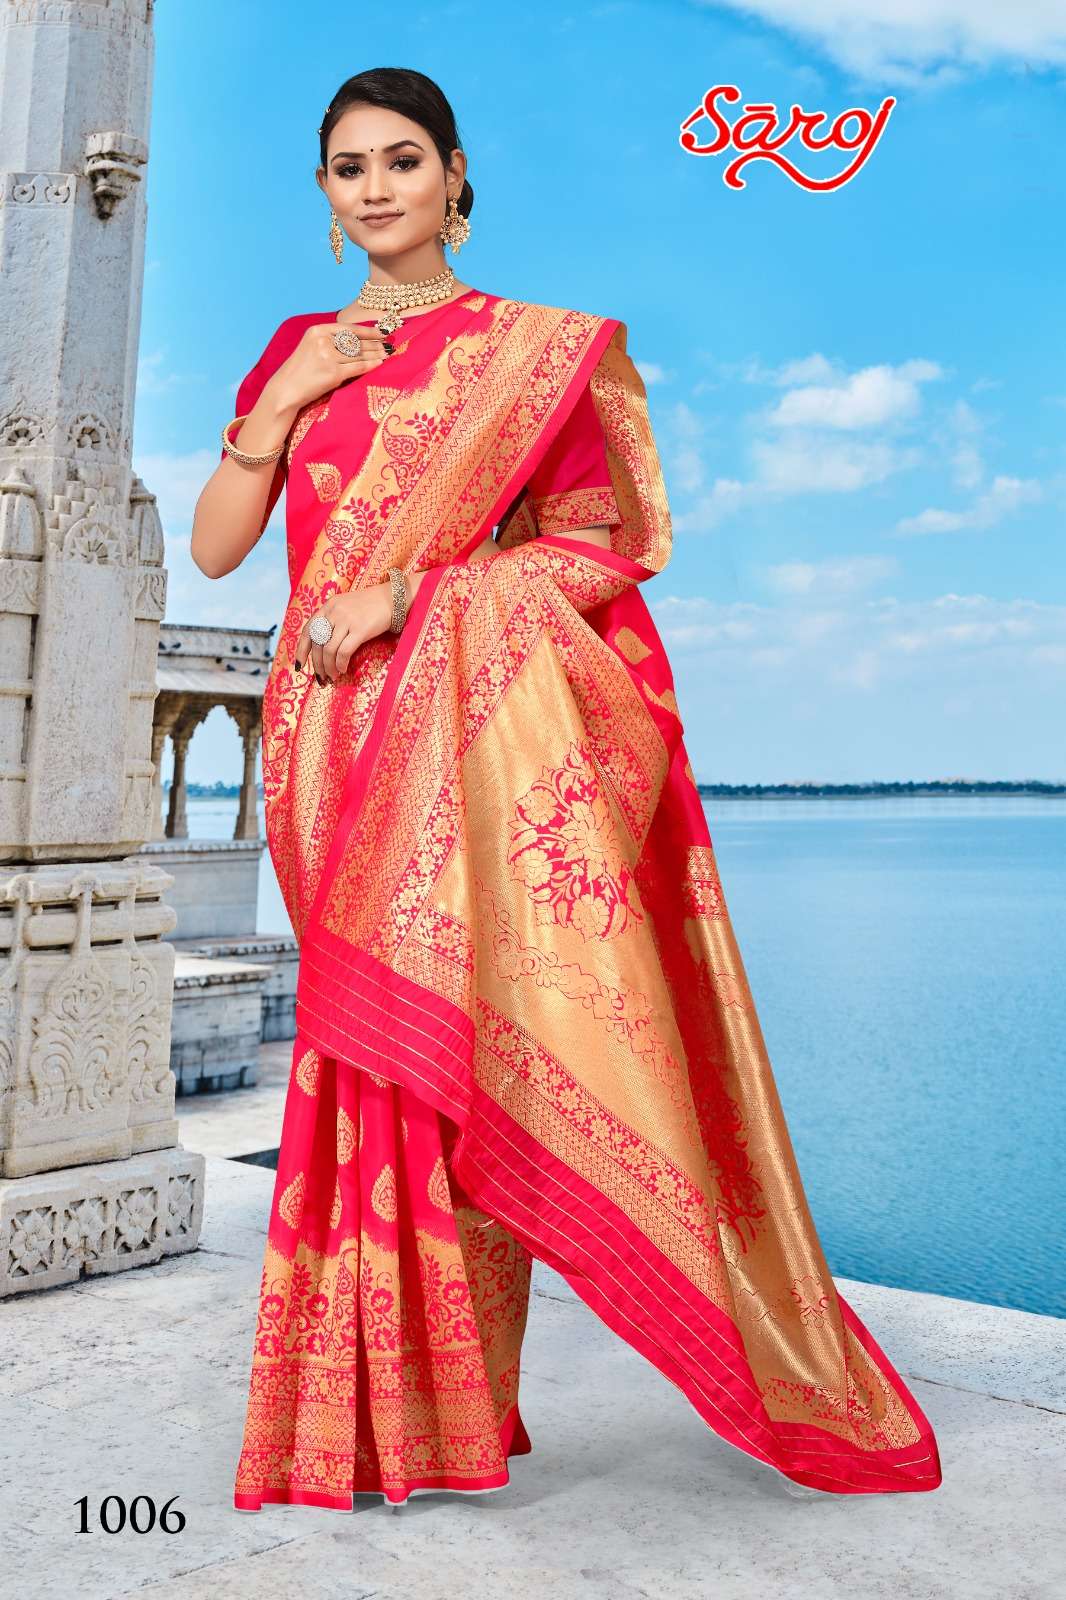 Saroj textile presents Kaamya vol 1 banarasi sarees catalogue